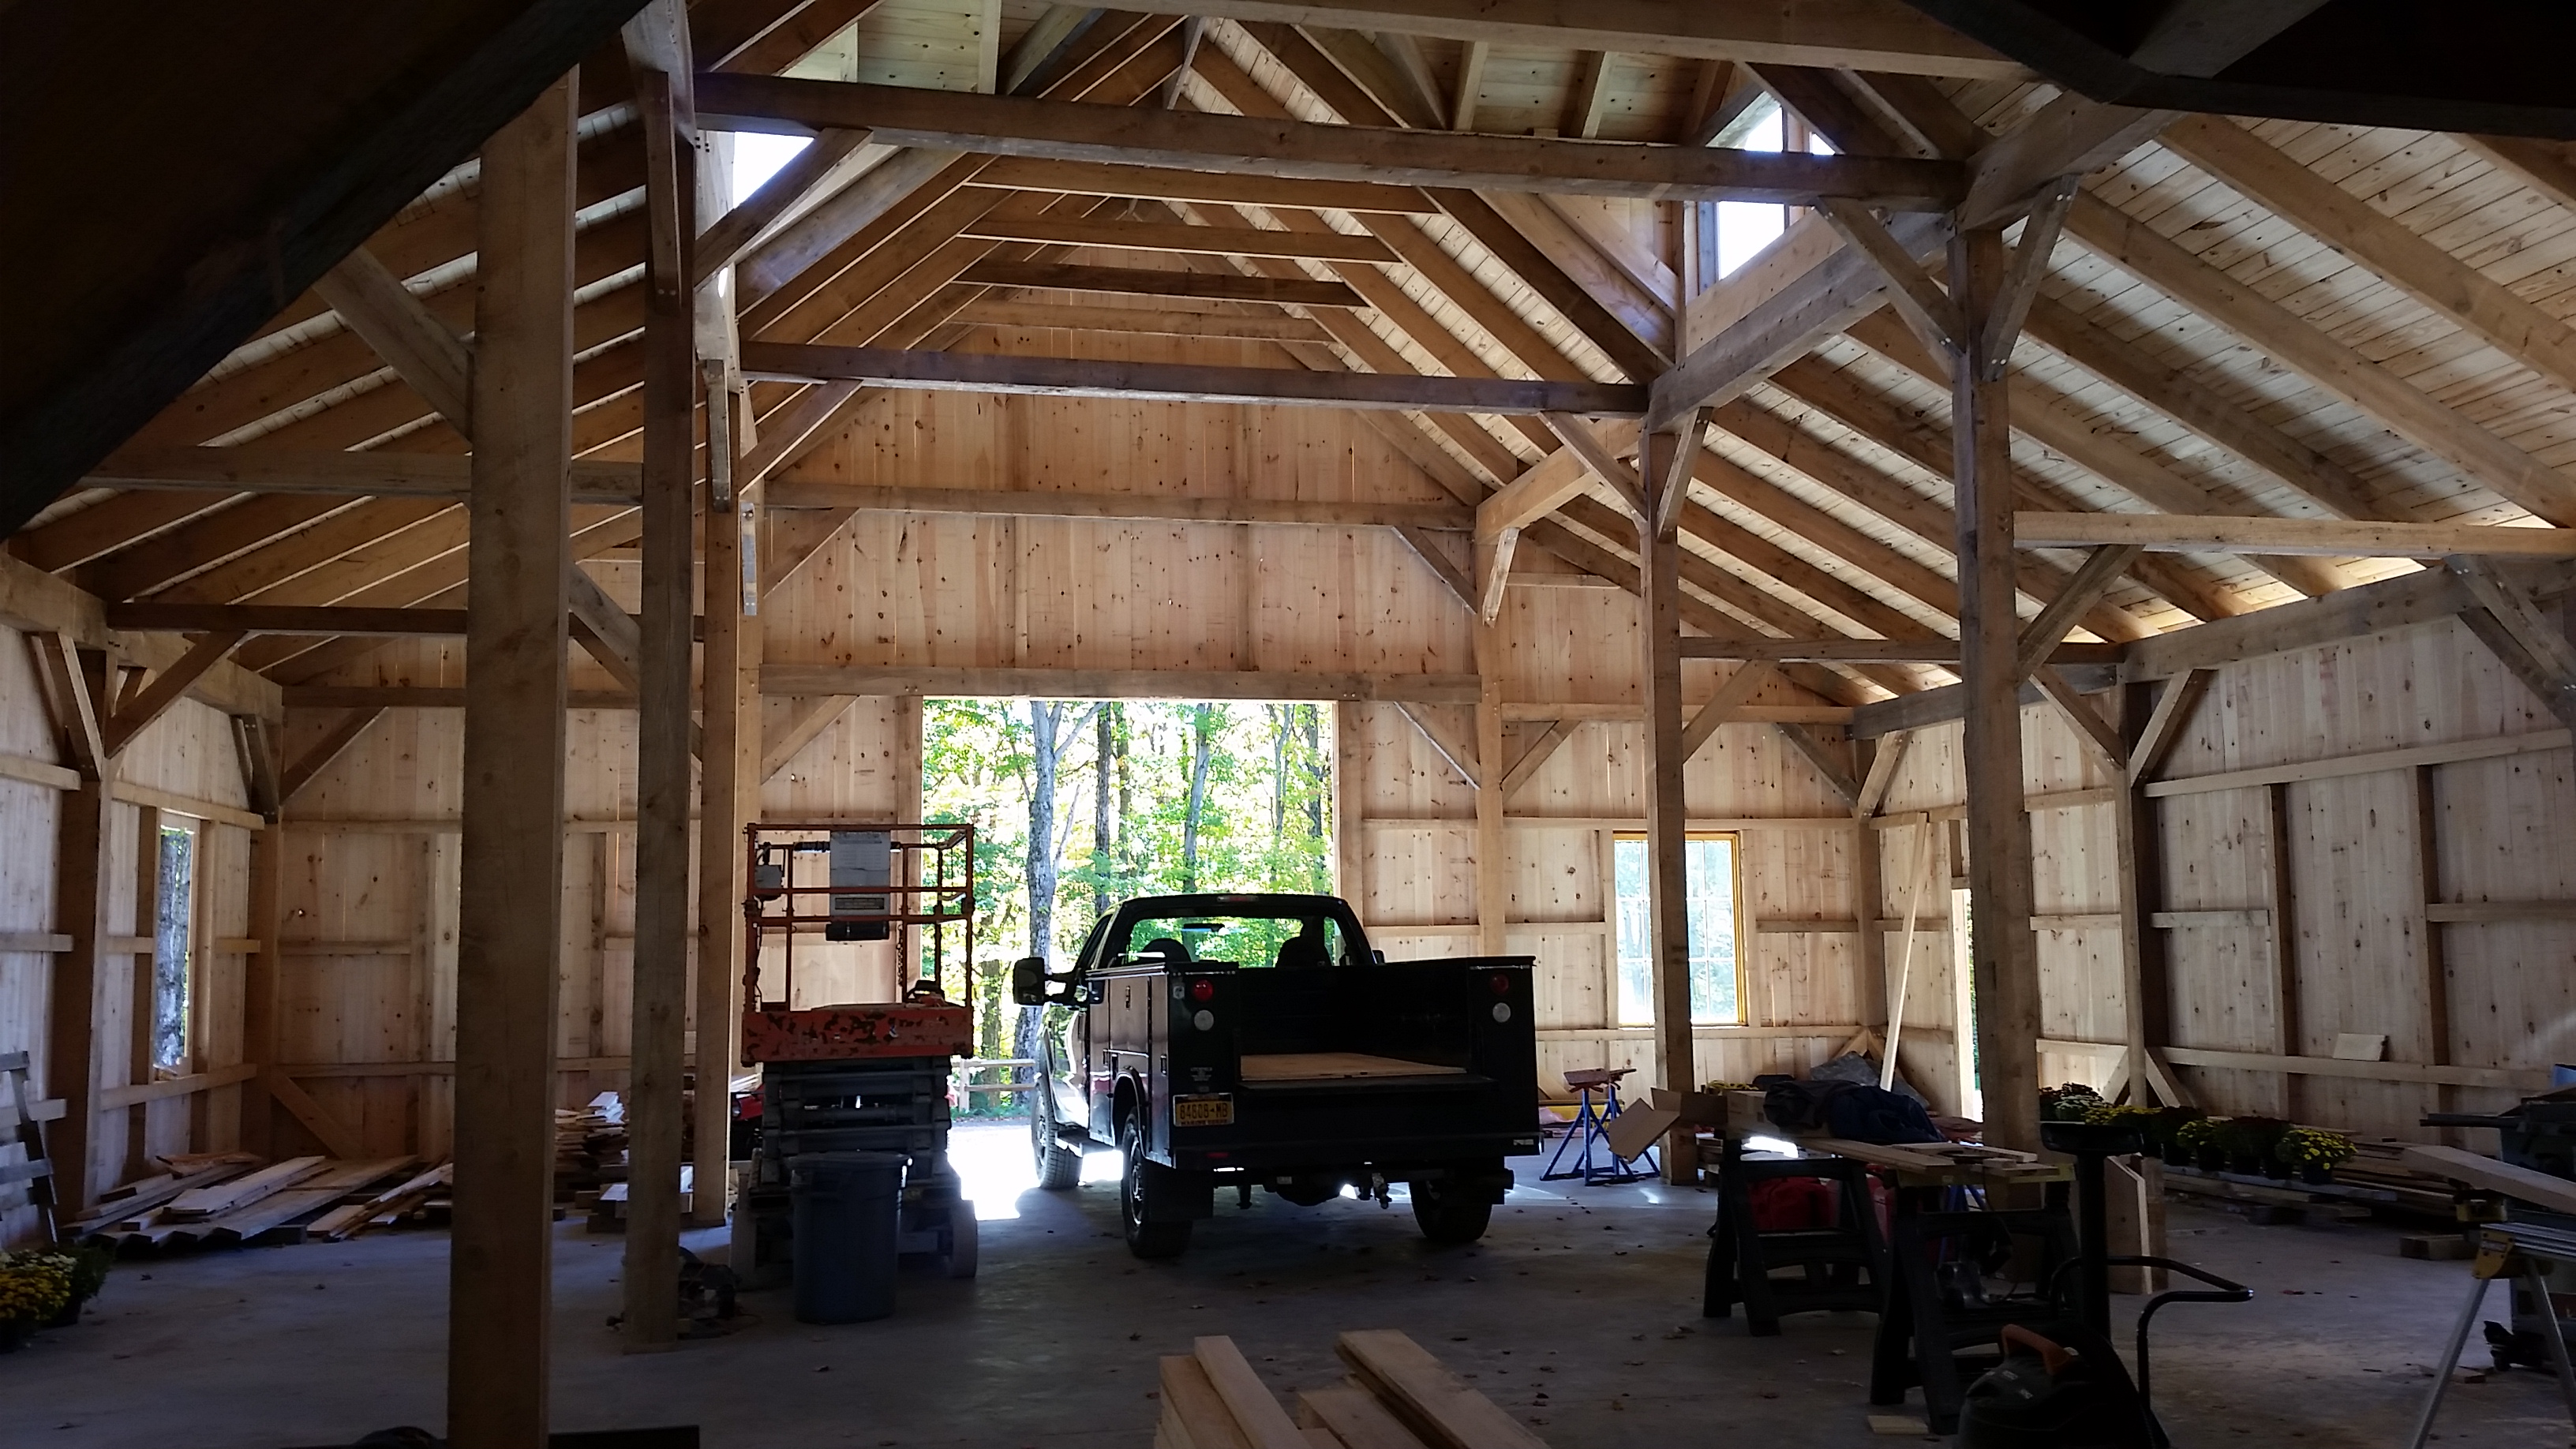  Building the Barn22 